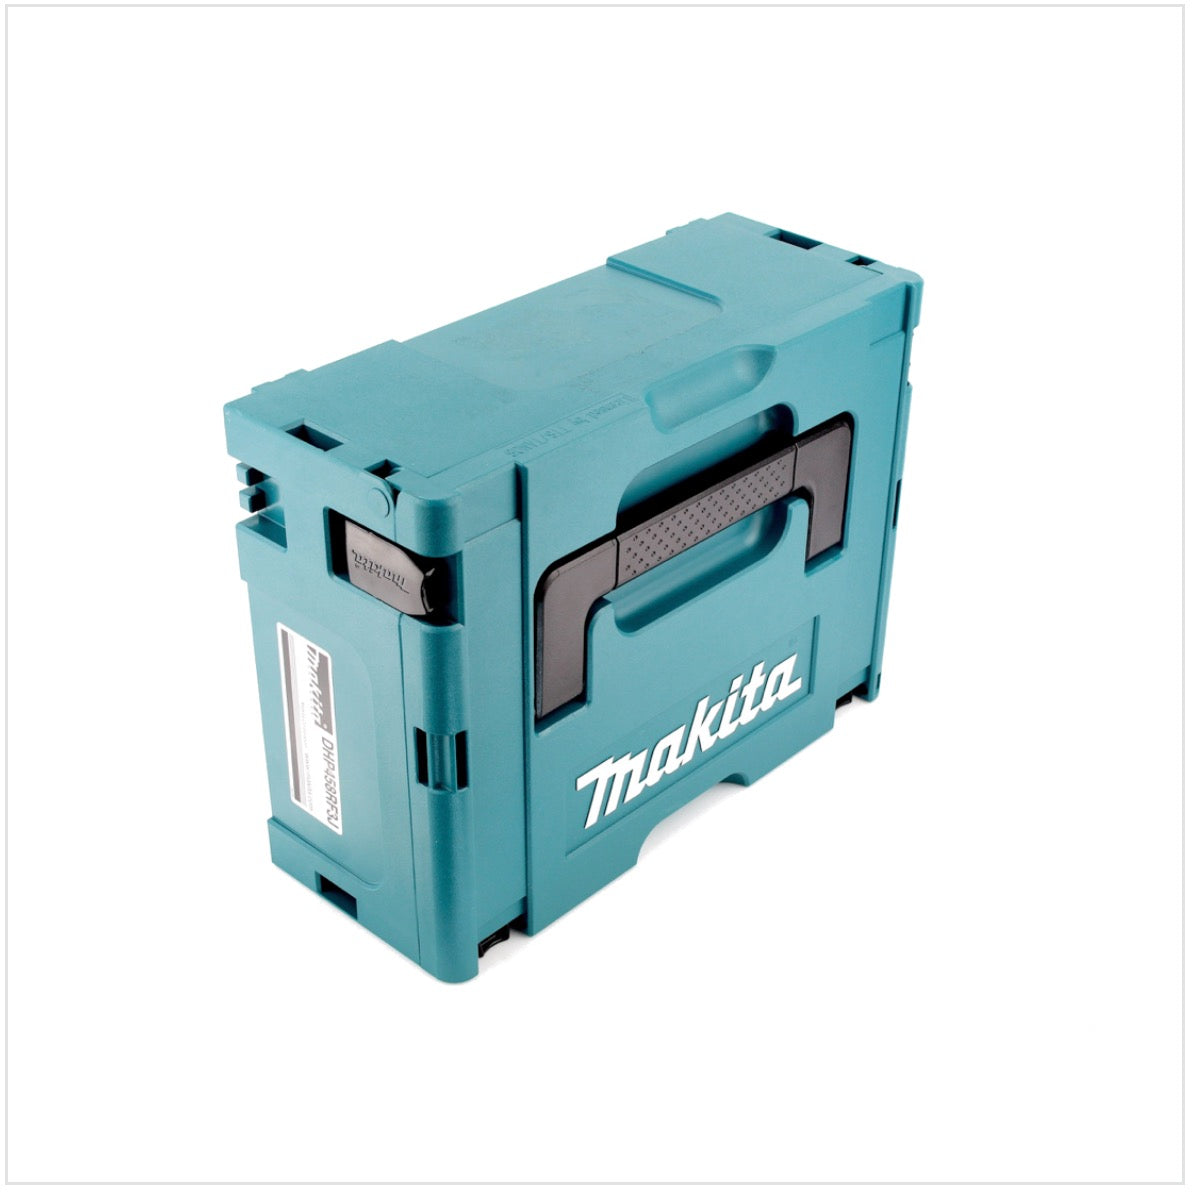 2x Makita Kunststoff Werkzeug Koffer MAKPAC 2 - ohne Einlage - Toolbrothers